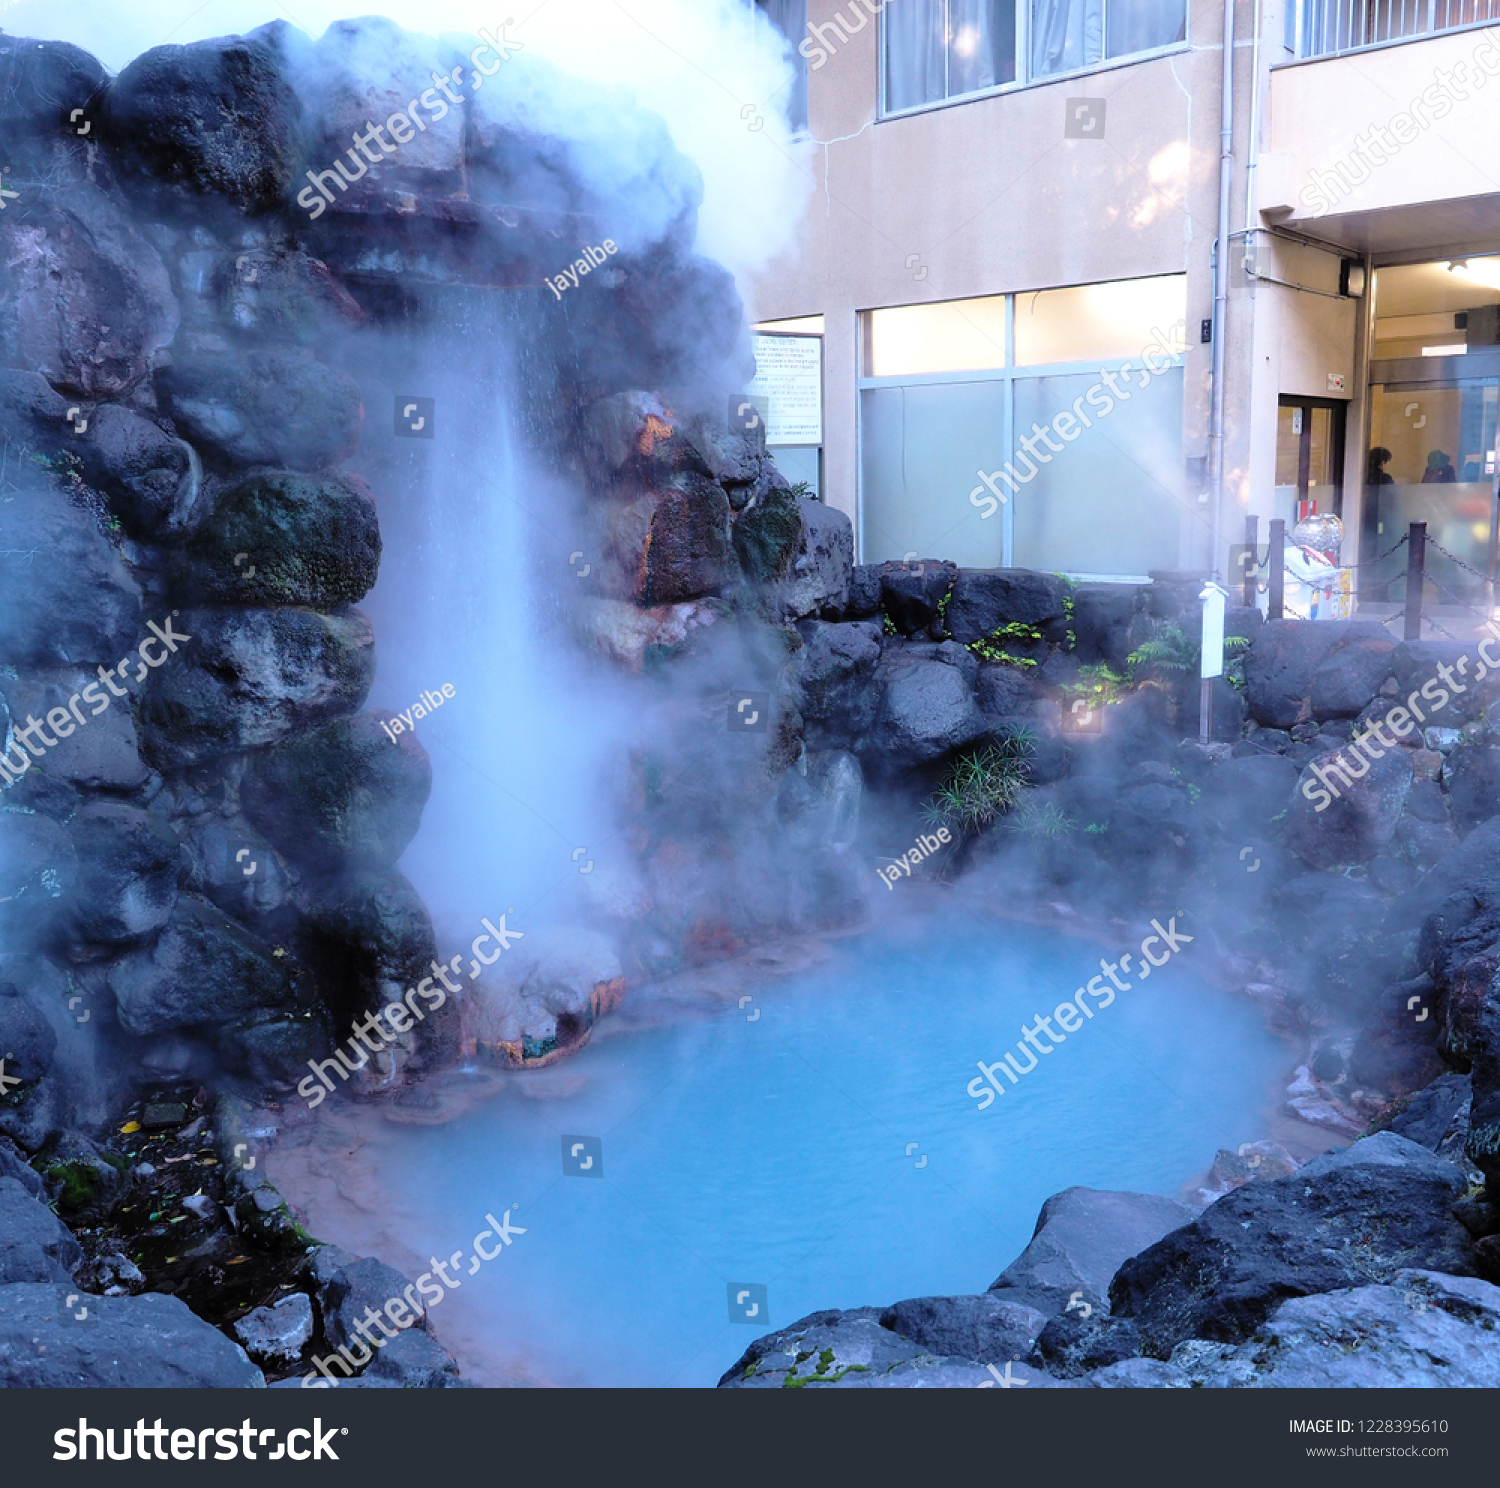 tatsumaki hot spring beppujapan stock photo edit now 1228395610 shutterstock